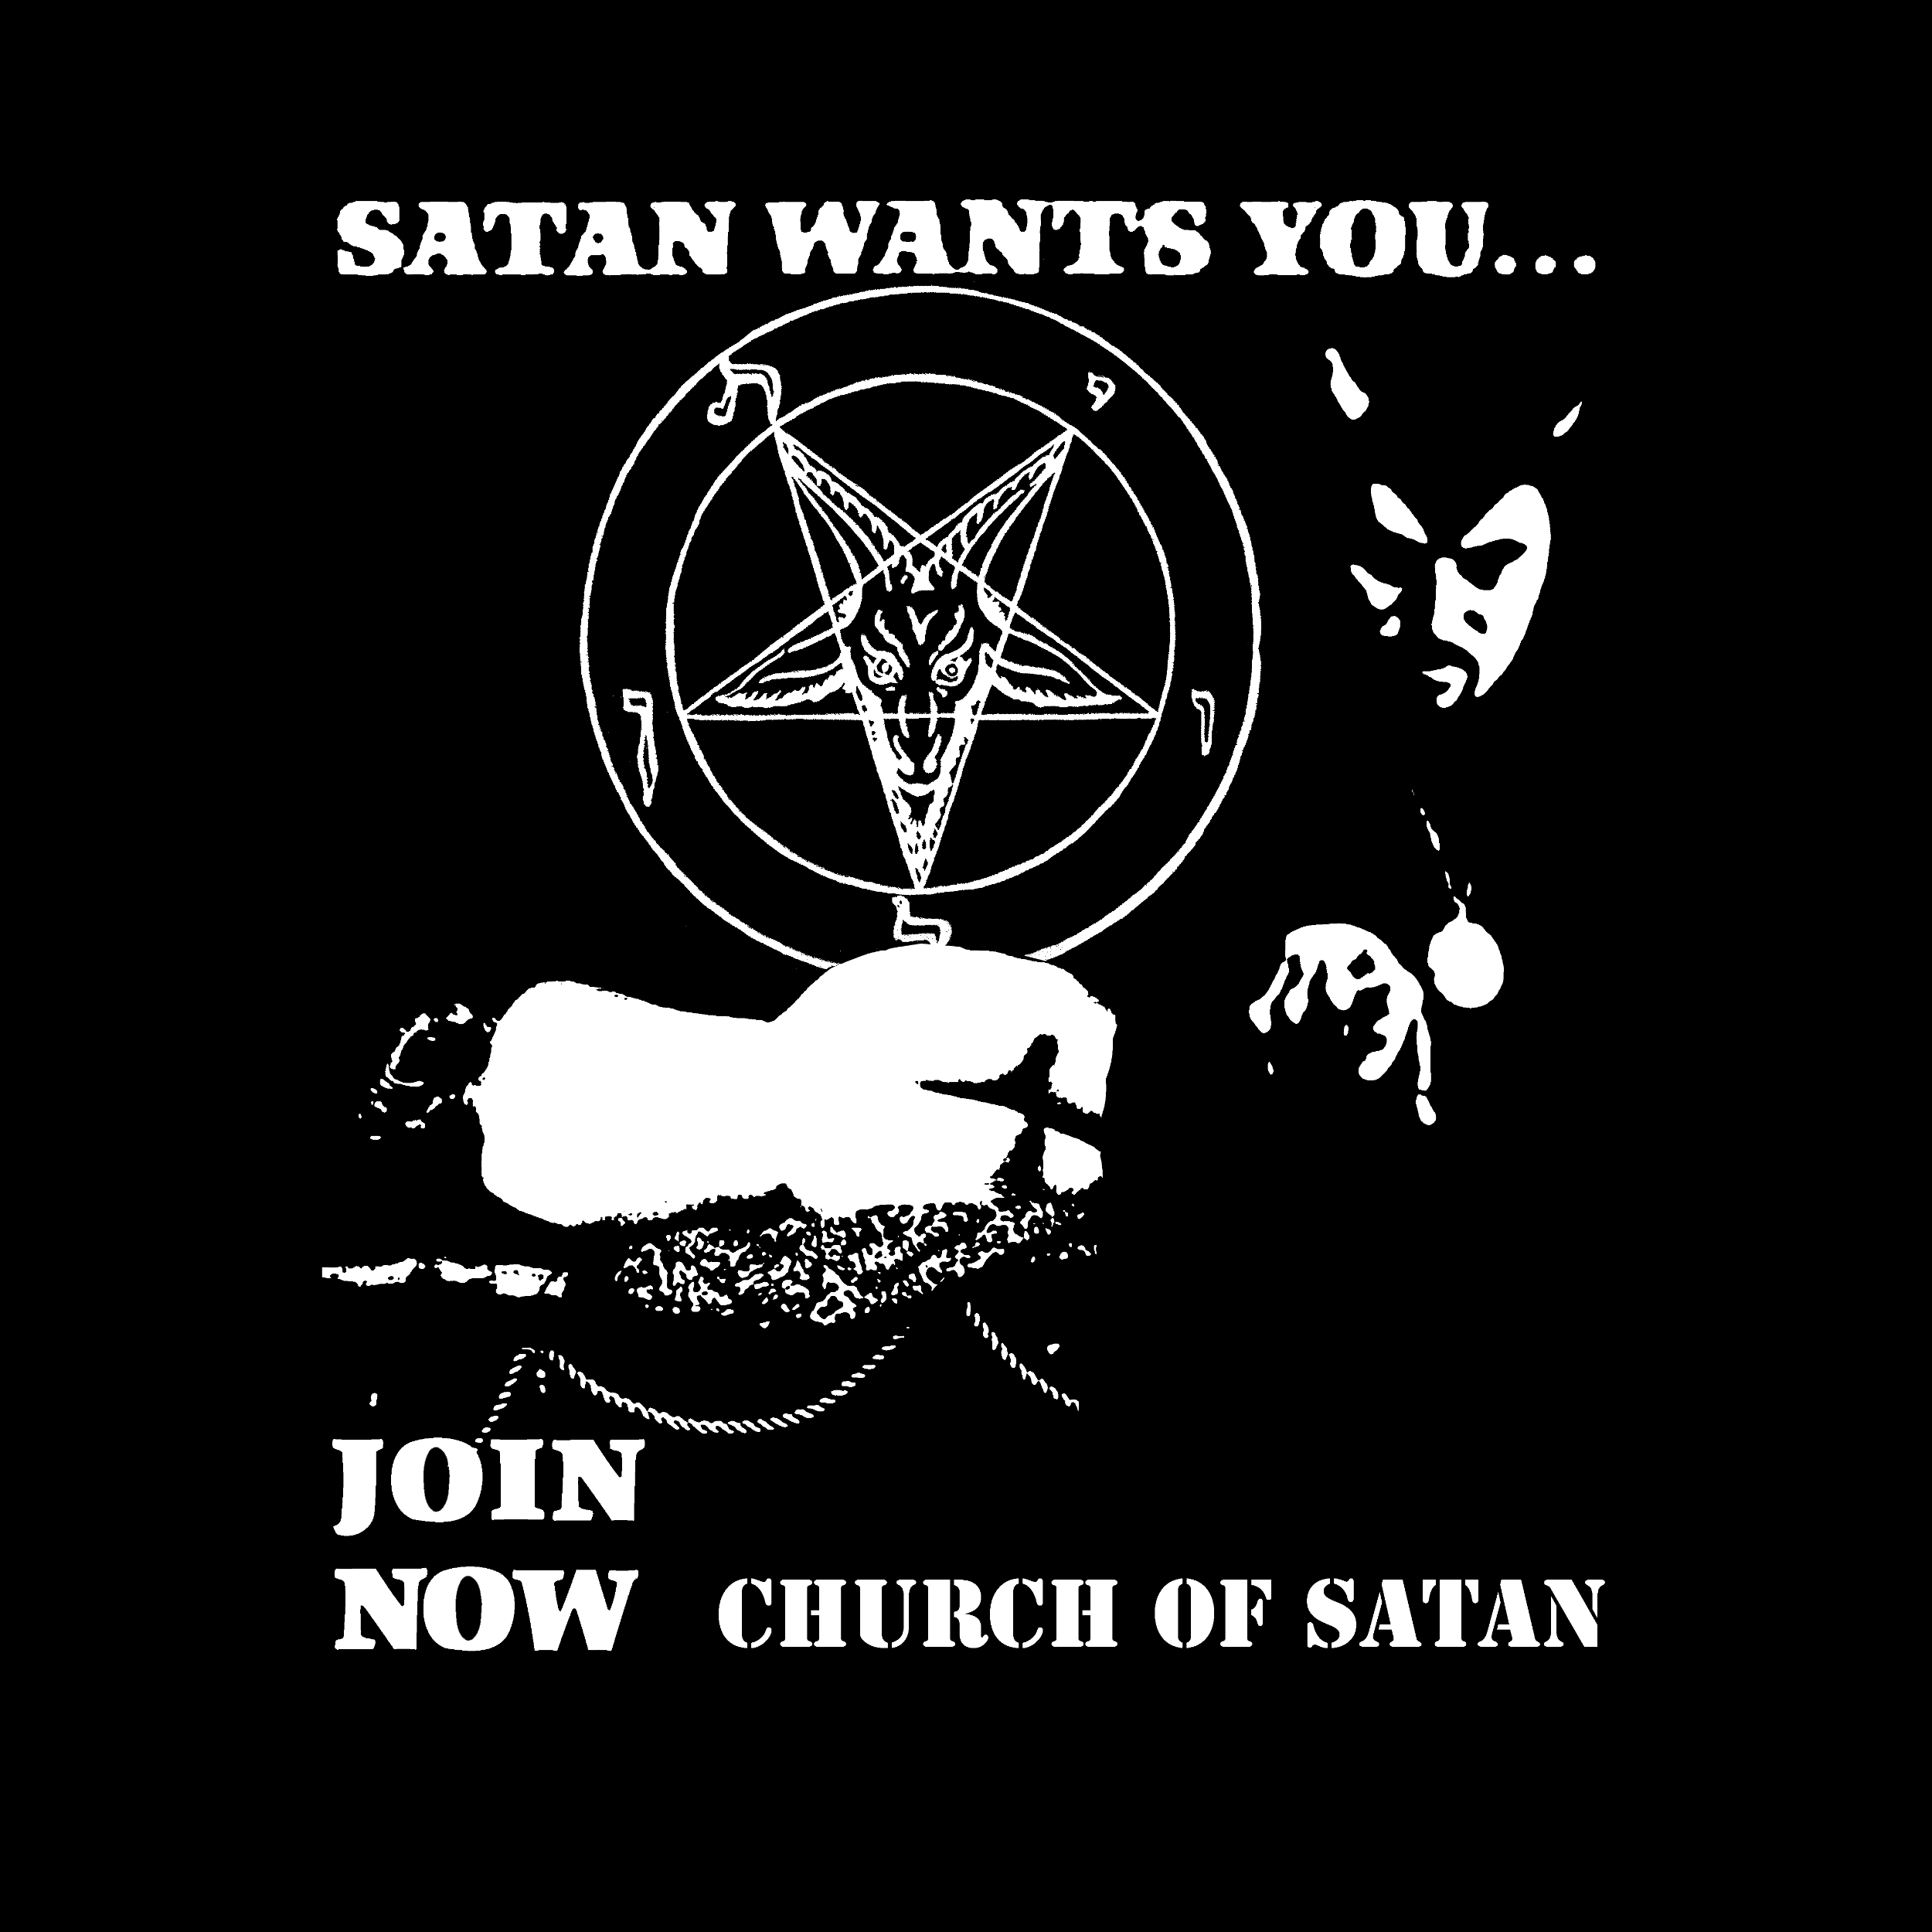 Church Of Satan Wants You Premium Tee